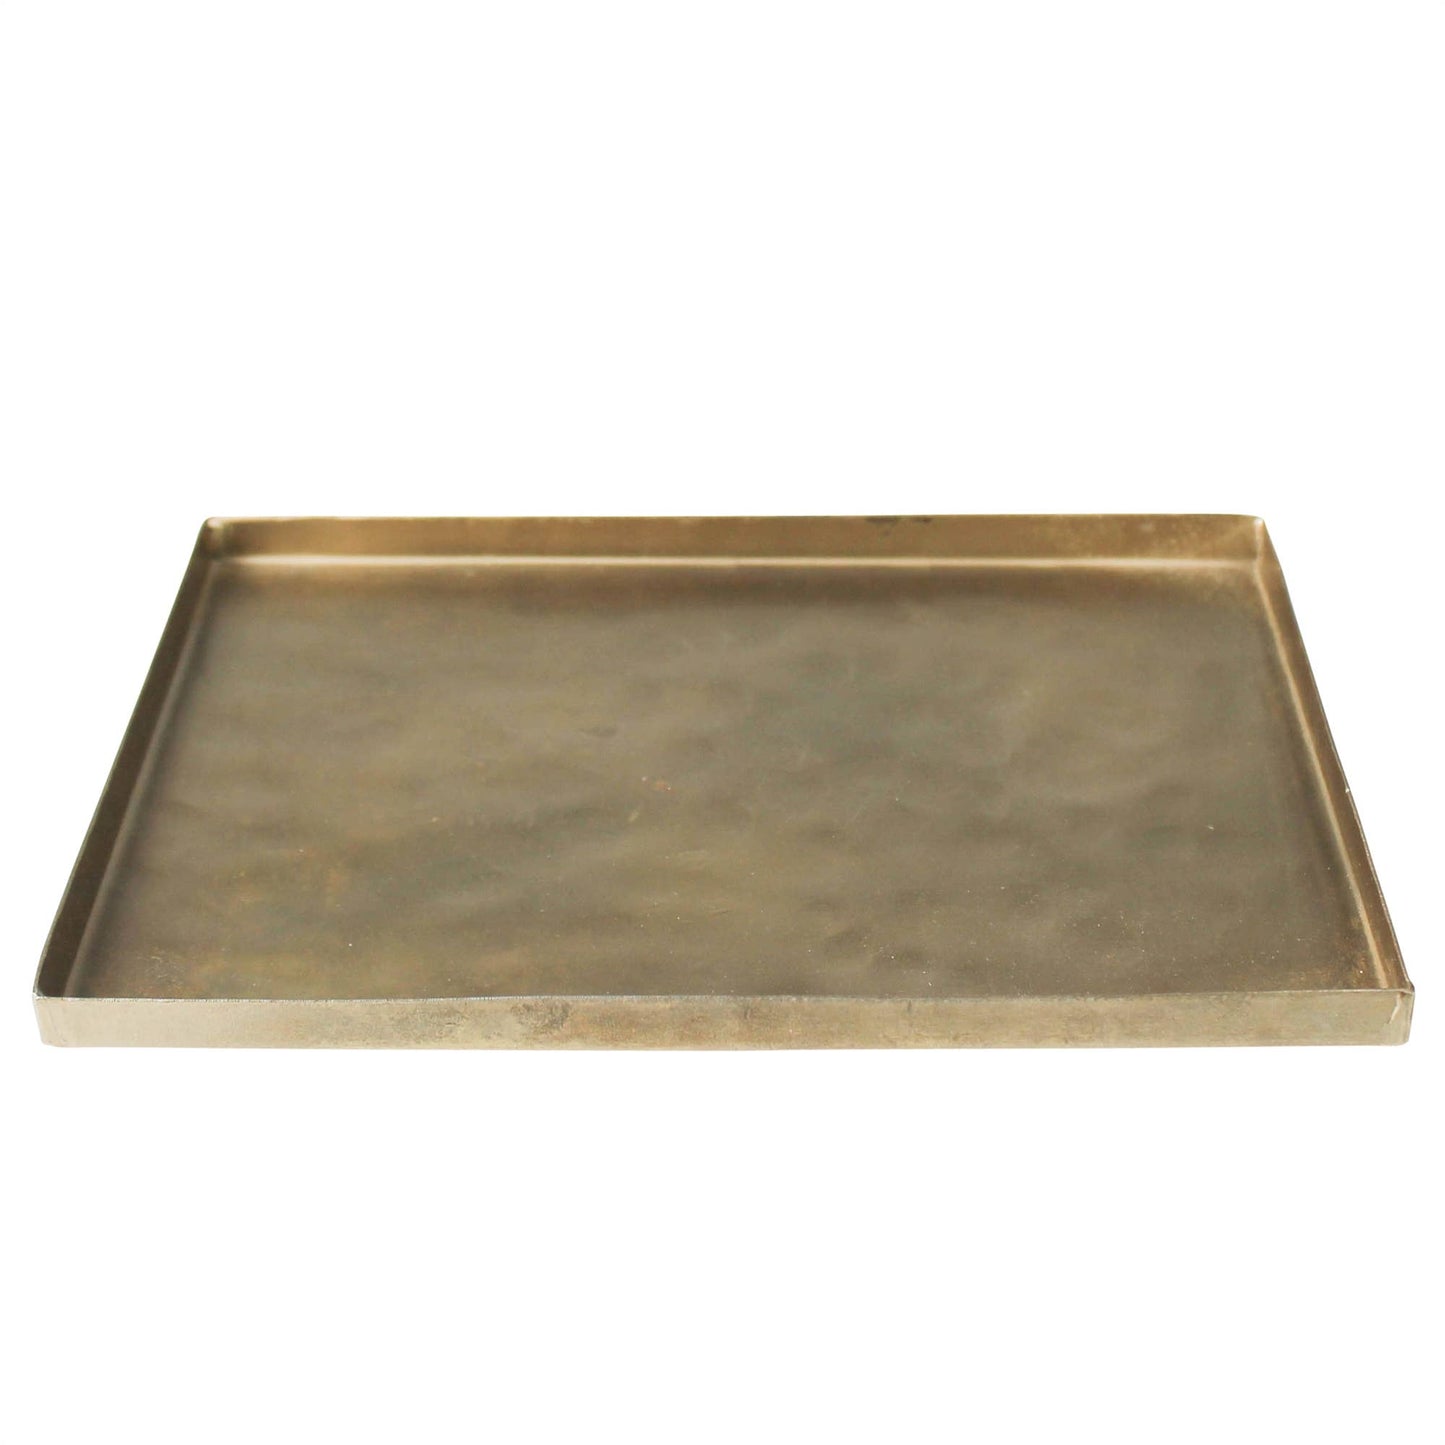 Tulum Tray, Brass - Rect Lrg: Aluminum / Brass